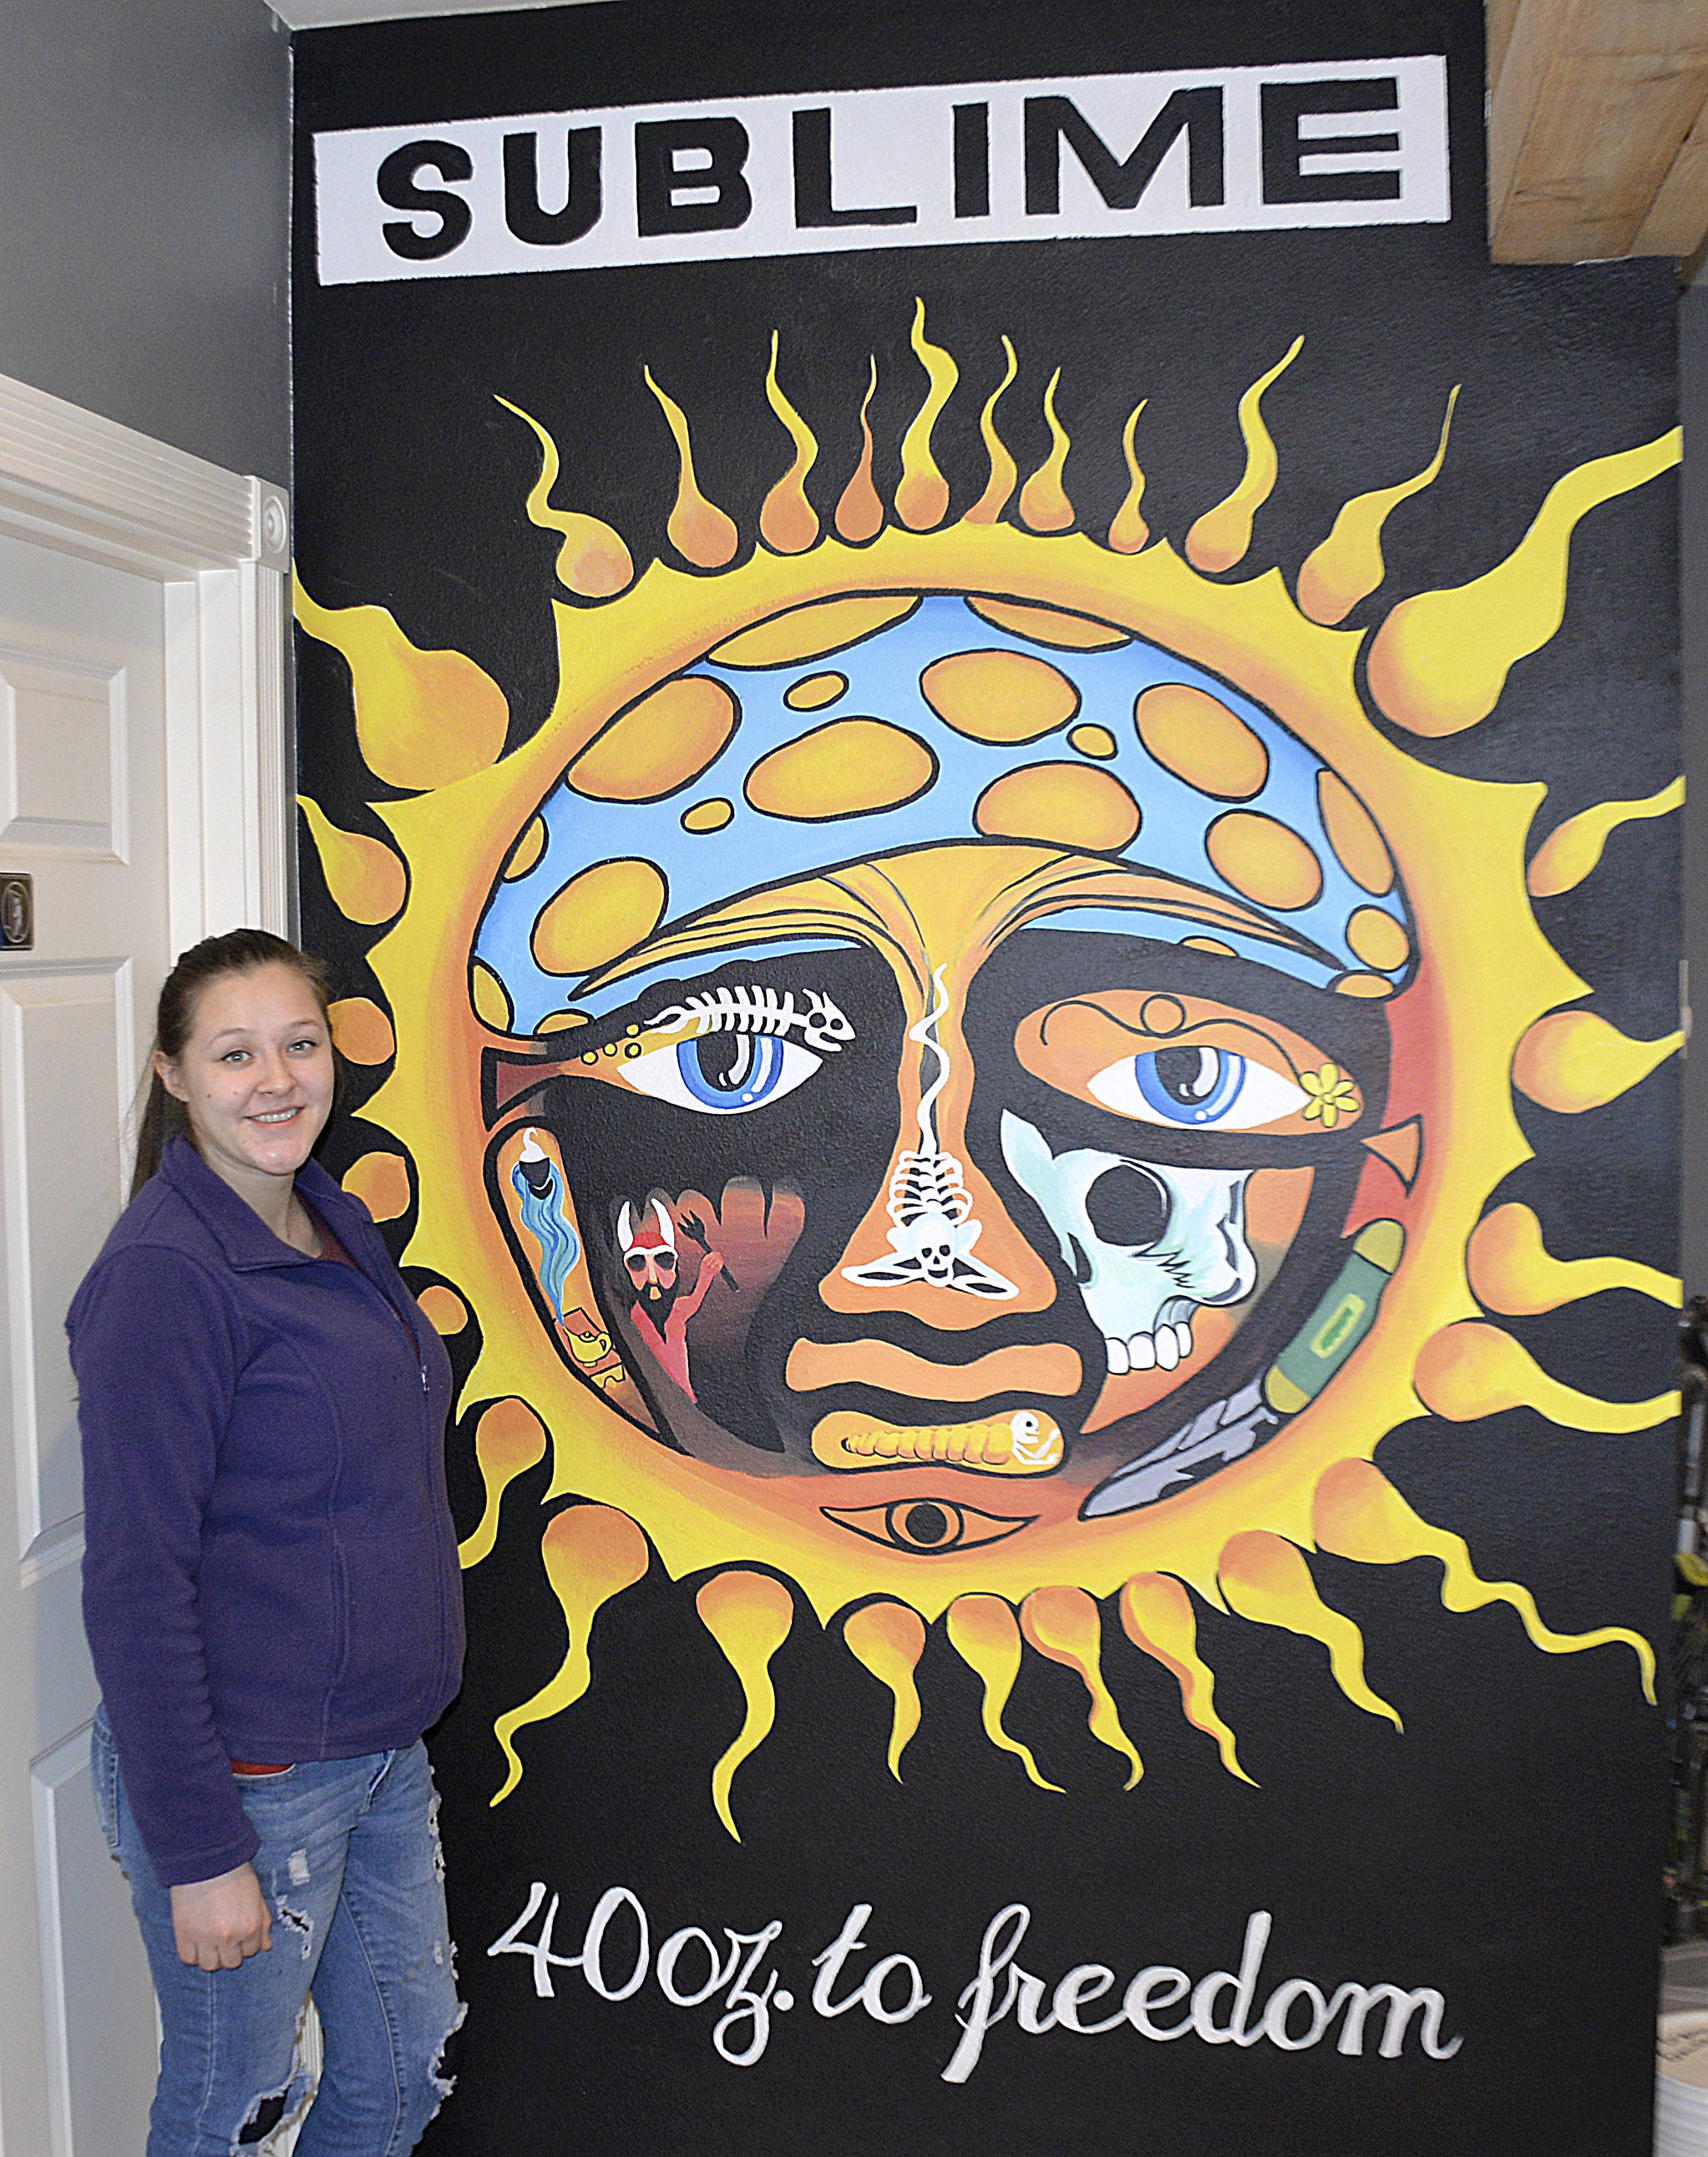 DAN HAMMOCK | GRAYS HARBOR NEWS GROUP Westport artist Kemi Strode painted this striking mural of Sublime’s 1992 “40 oz. to freedom” album cover inside the RocknBrews restaurant.